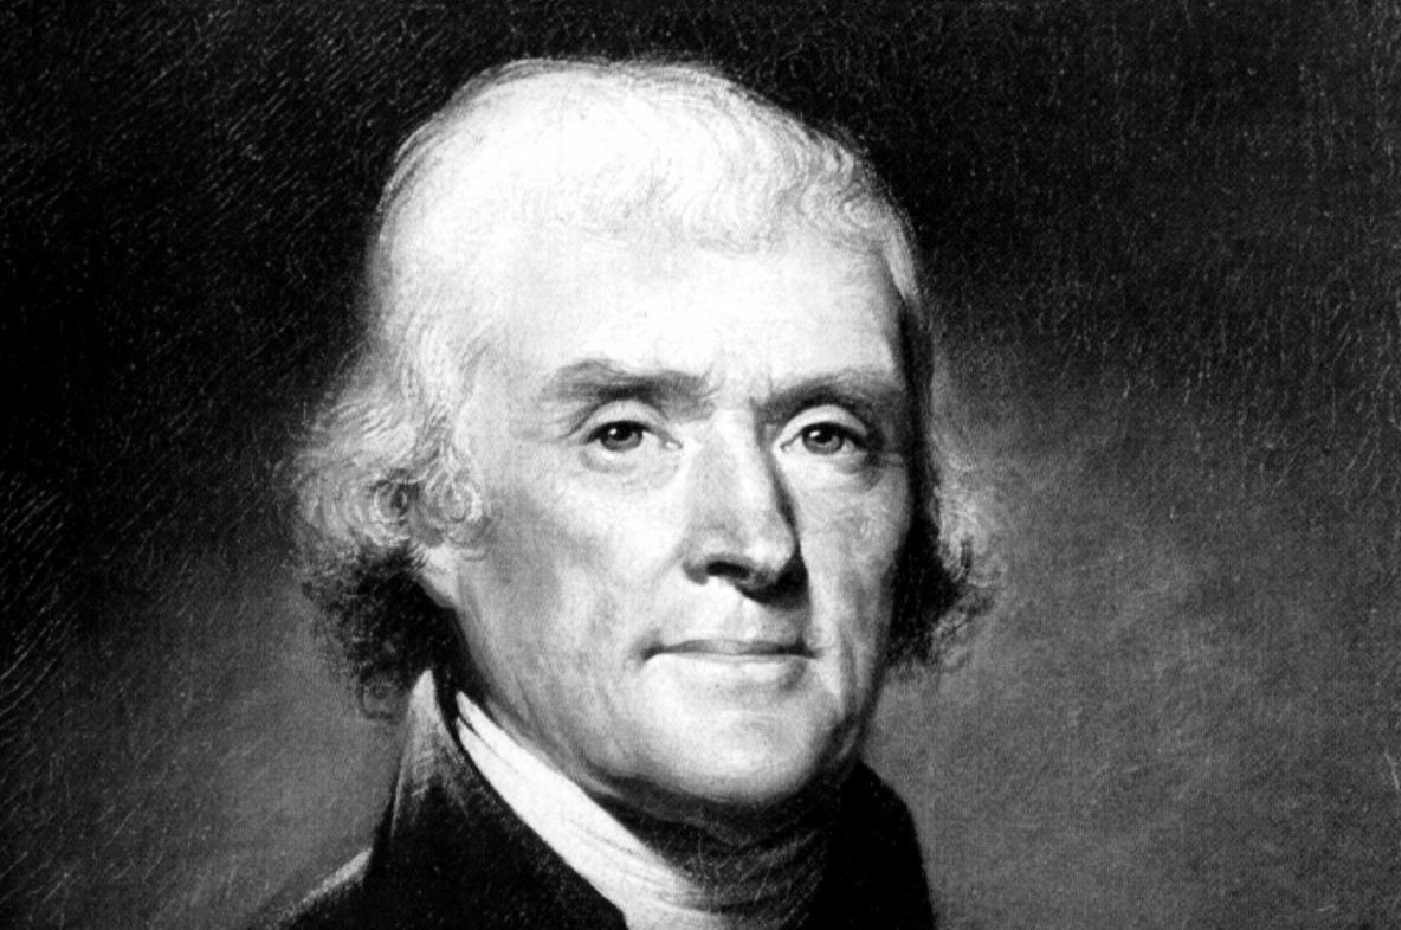 Was Thomas Jefferson an anti-federalist?